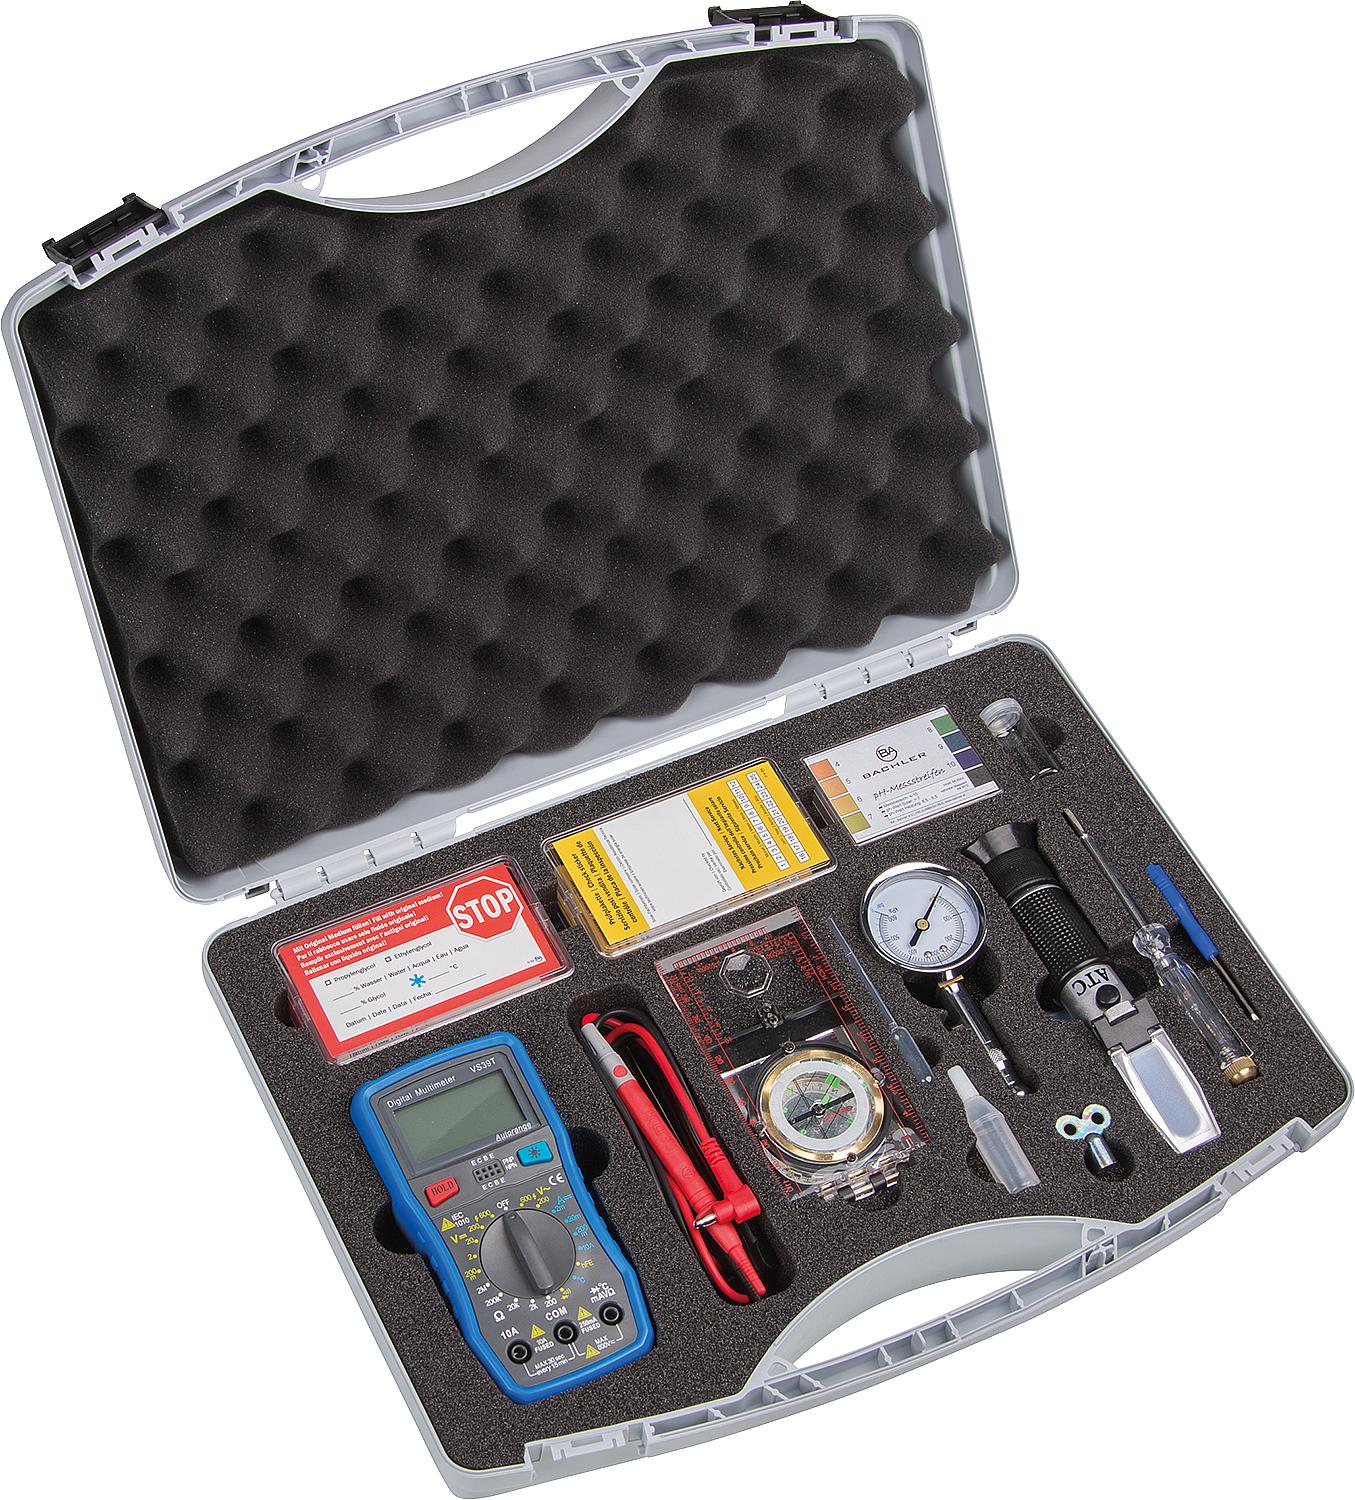 asdec life ® solar test case with handheld refractometer, compass, multimeter, test strips